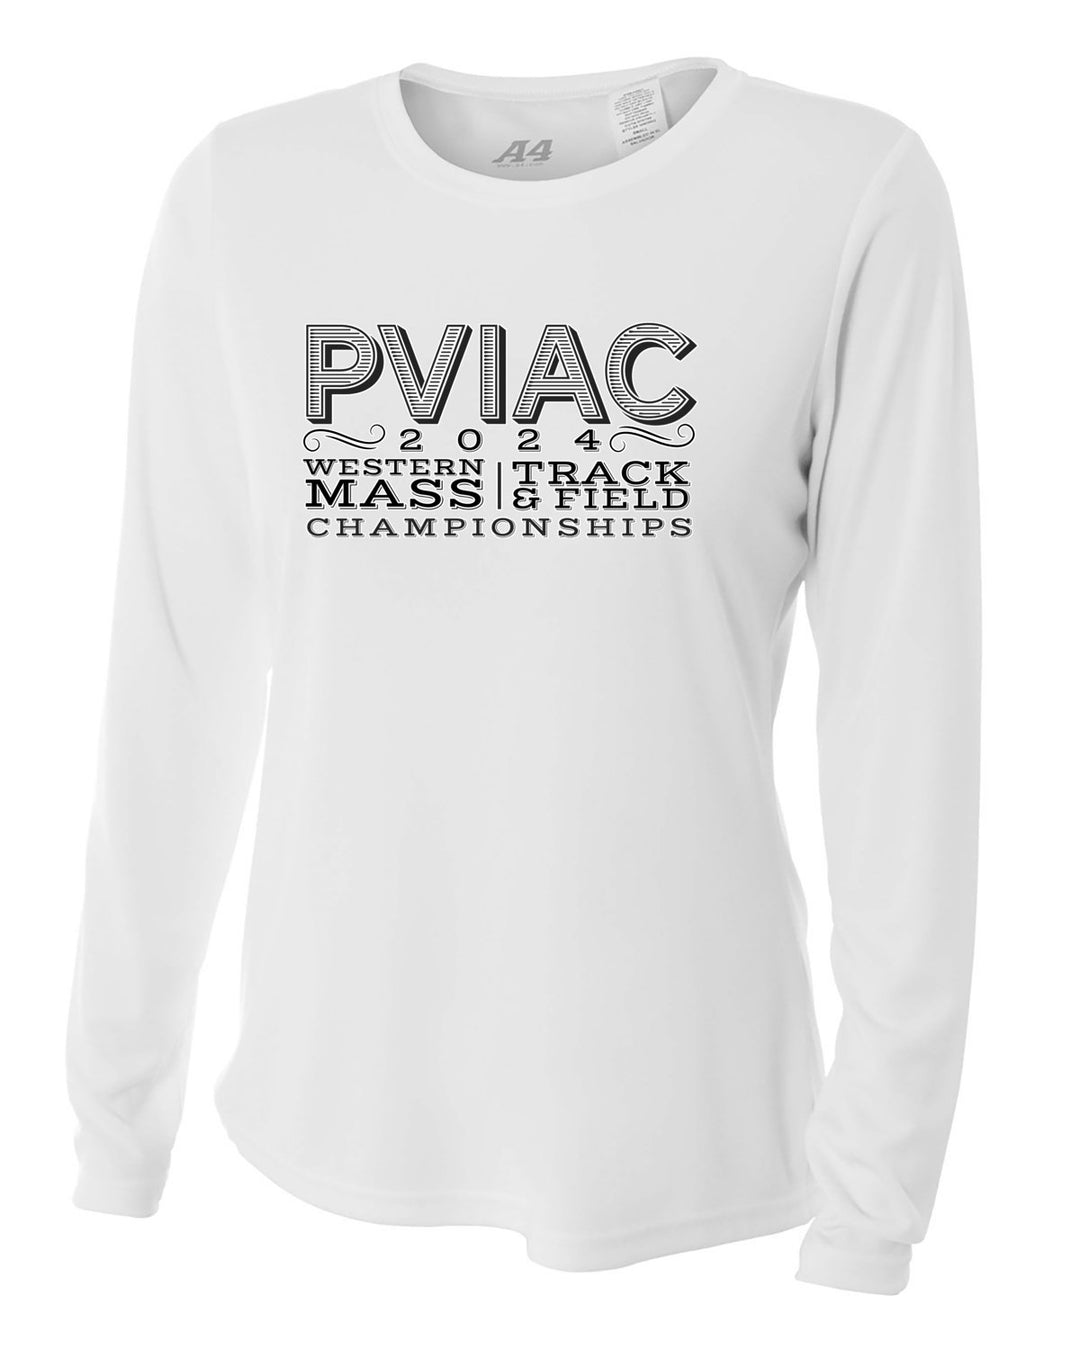 PVIAC Track & Field Championship - Women's Long Sleeve Cooling Performance Crew Shirt (NW3002)